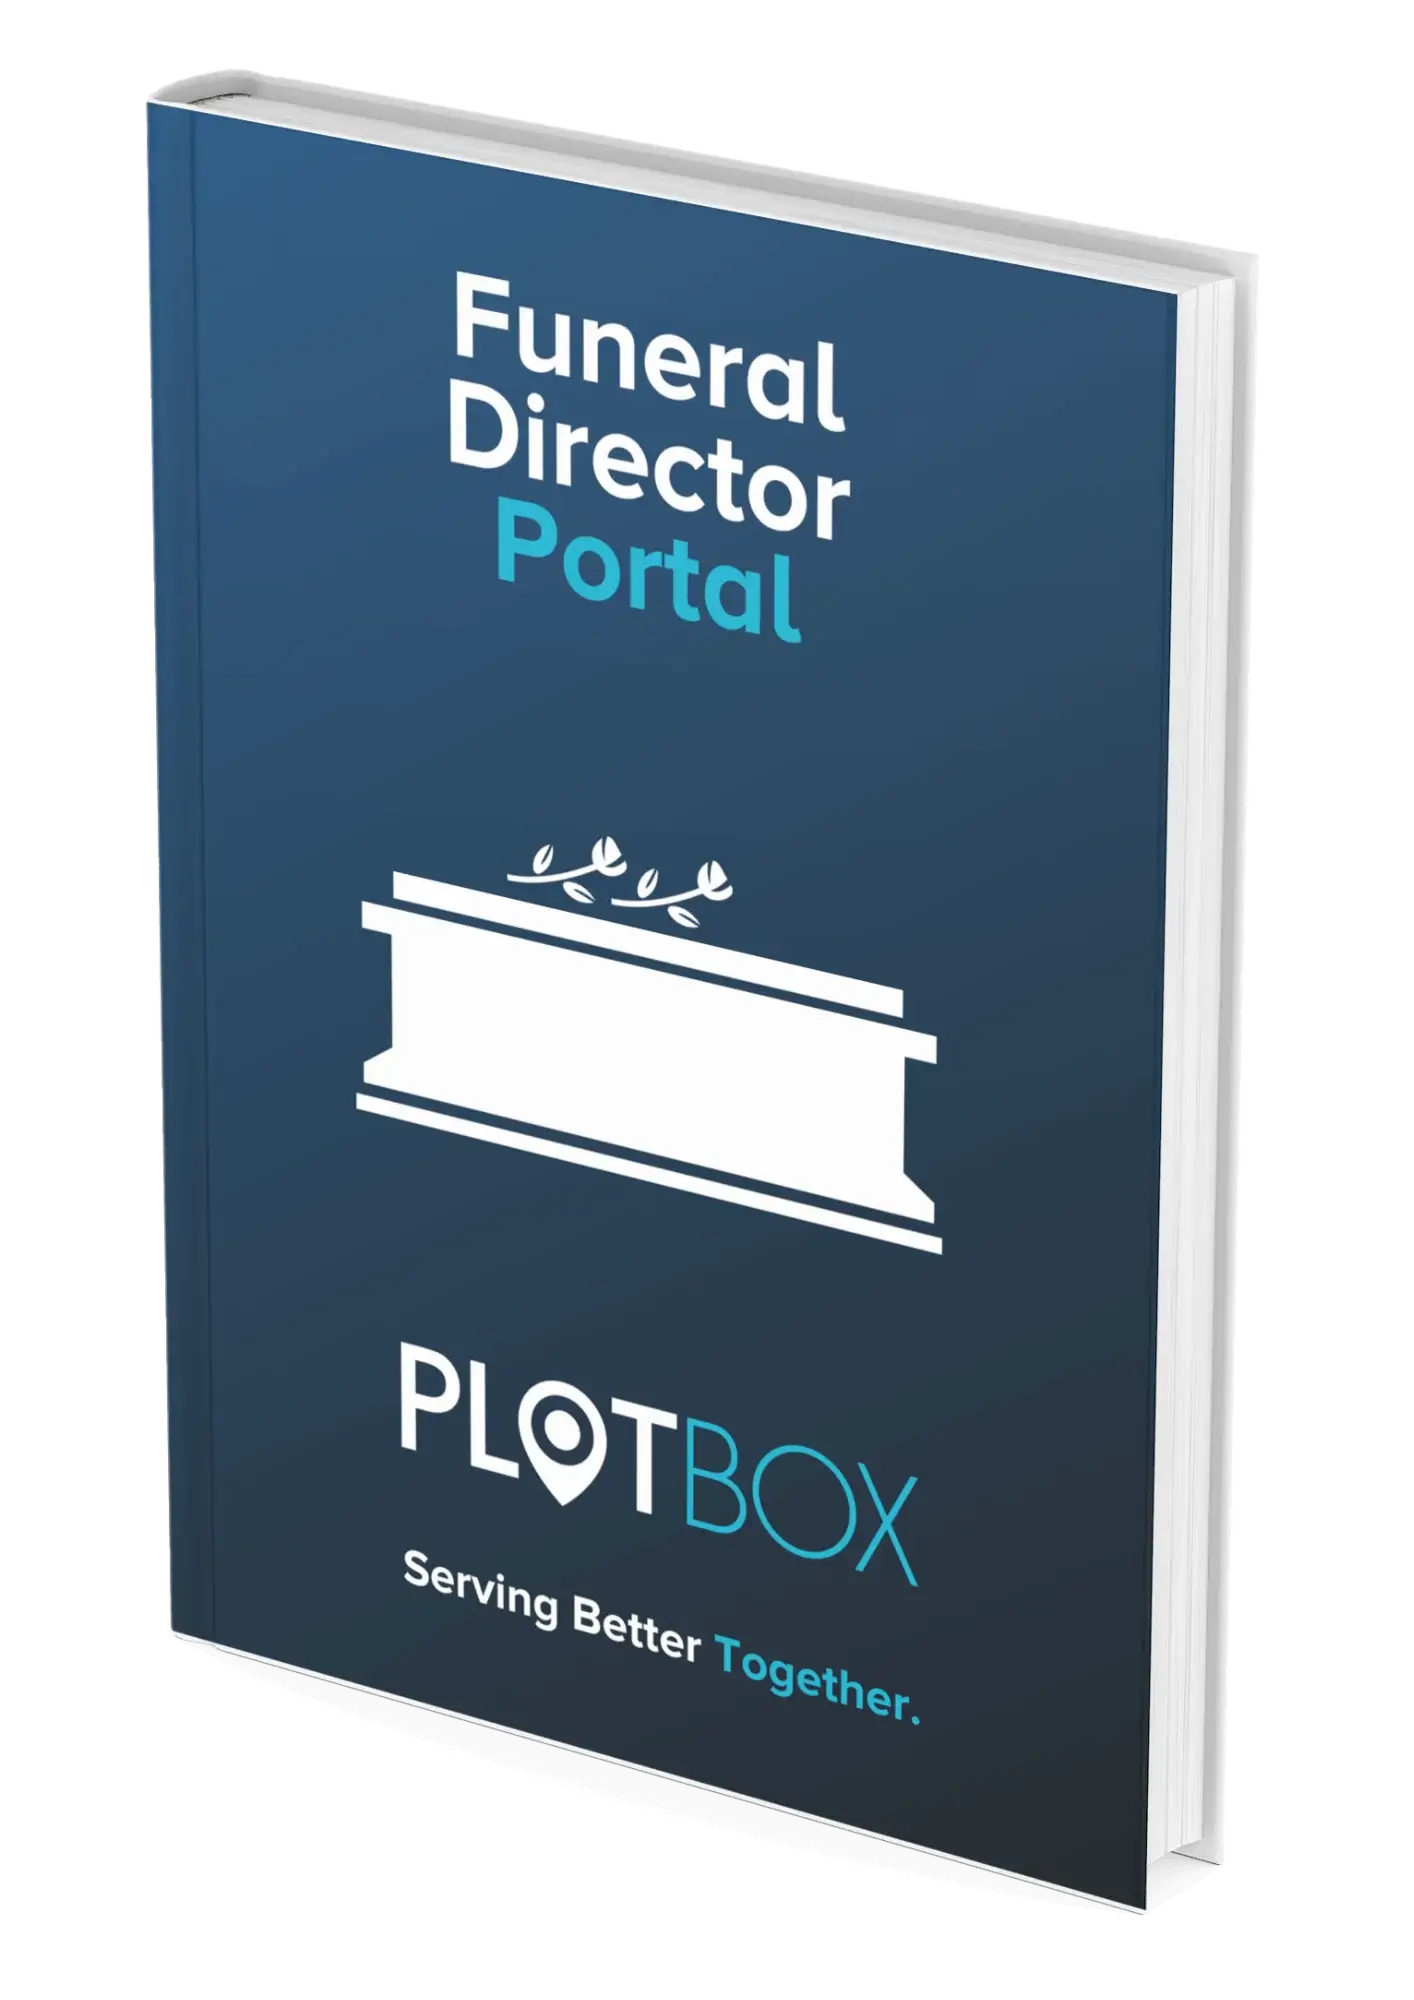 Funeral Director Portal - PlotBox 